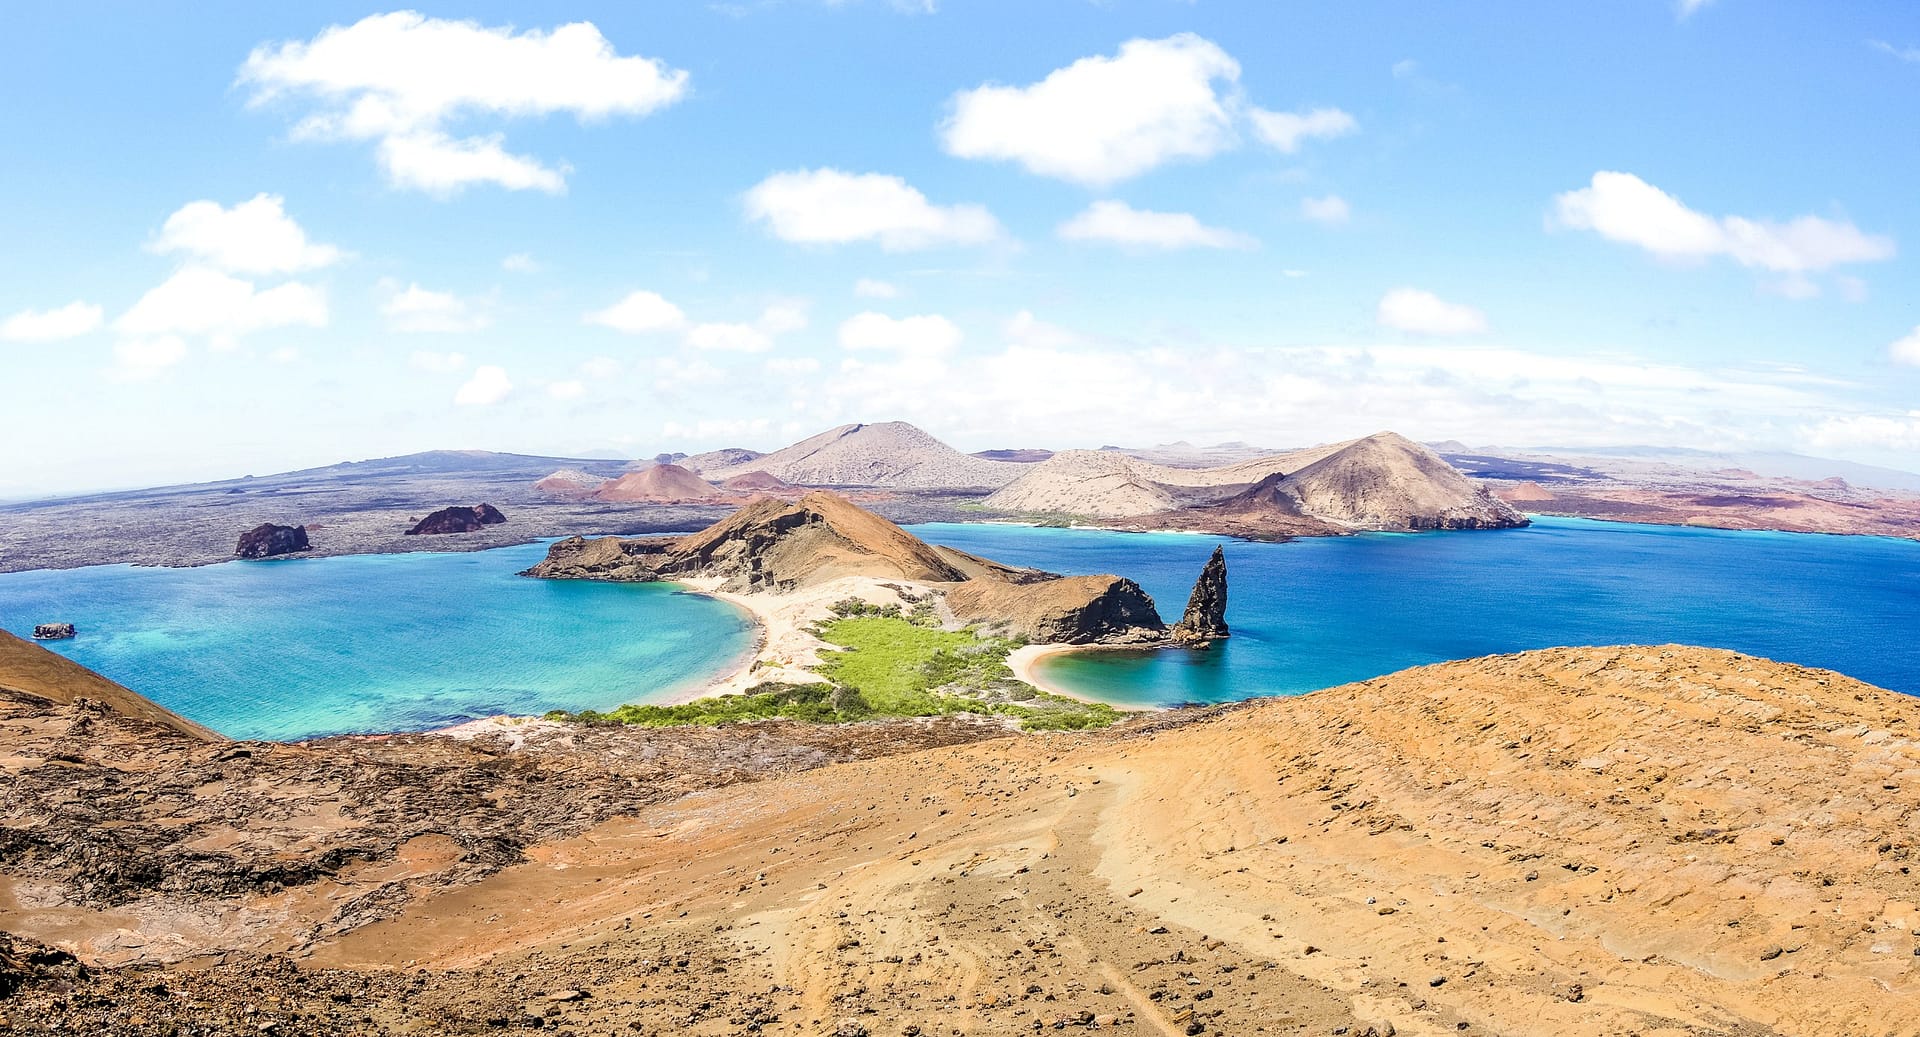 Panoramic view of " Isla Bartolome " at Galapagos Islands archip